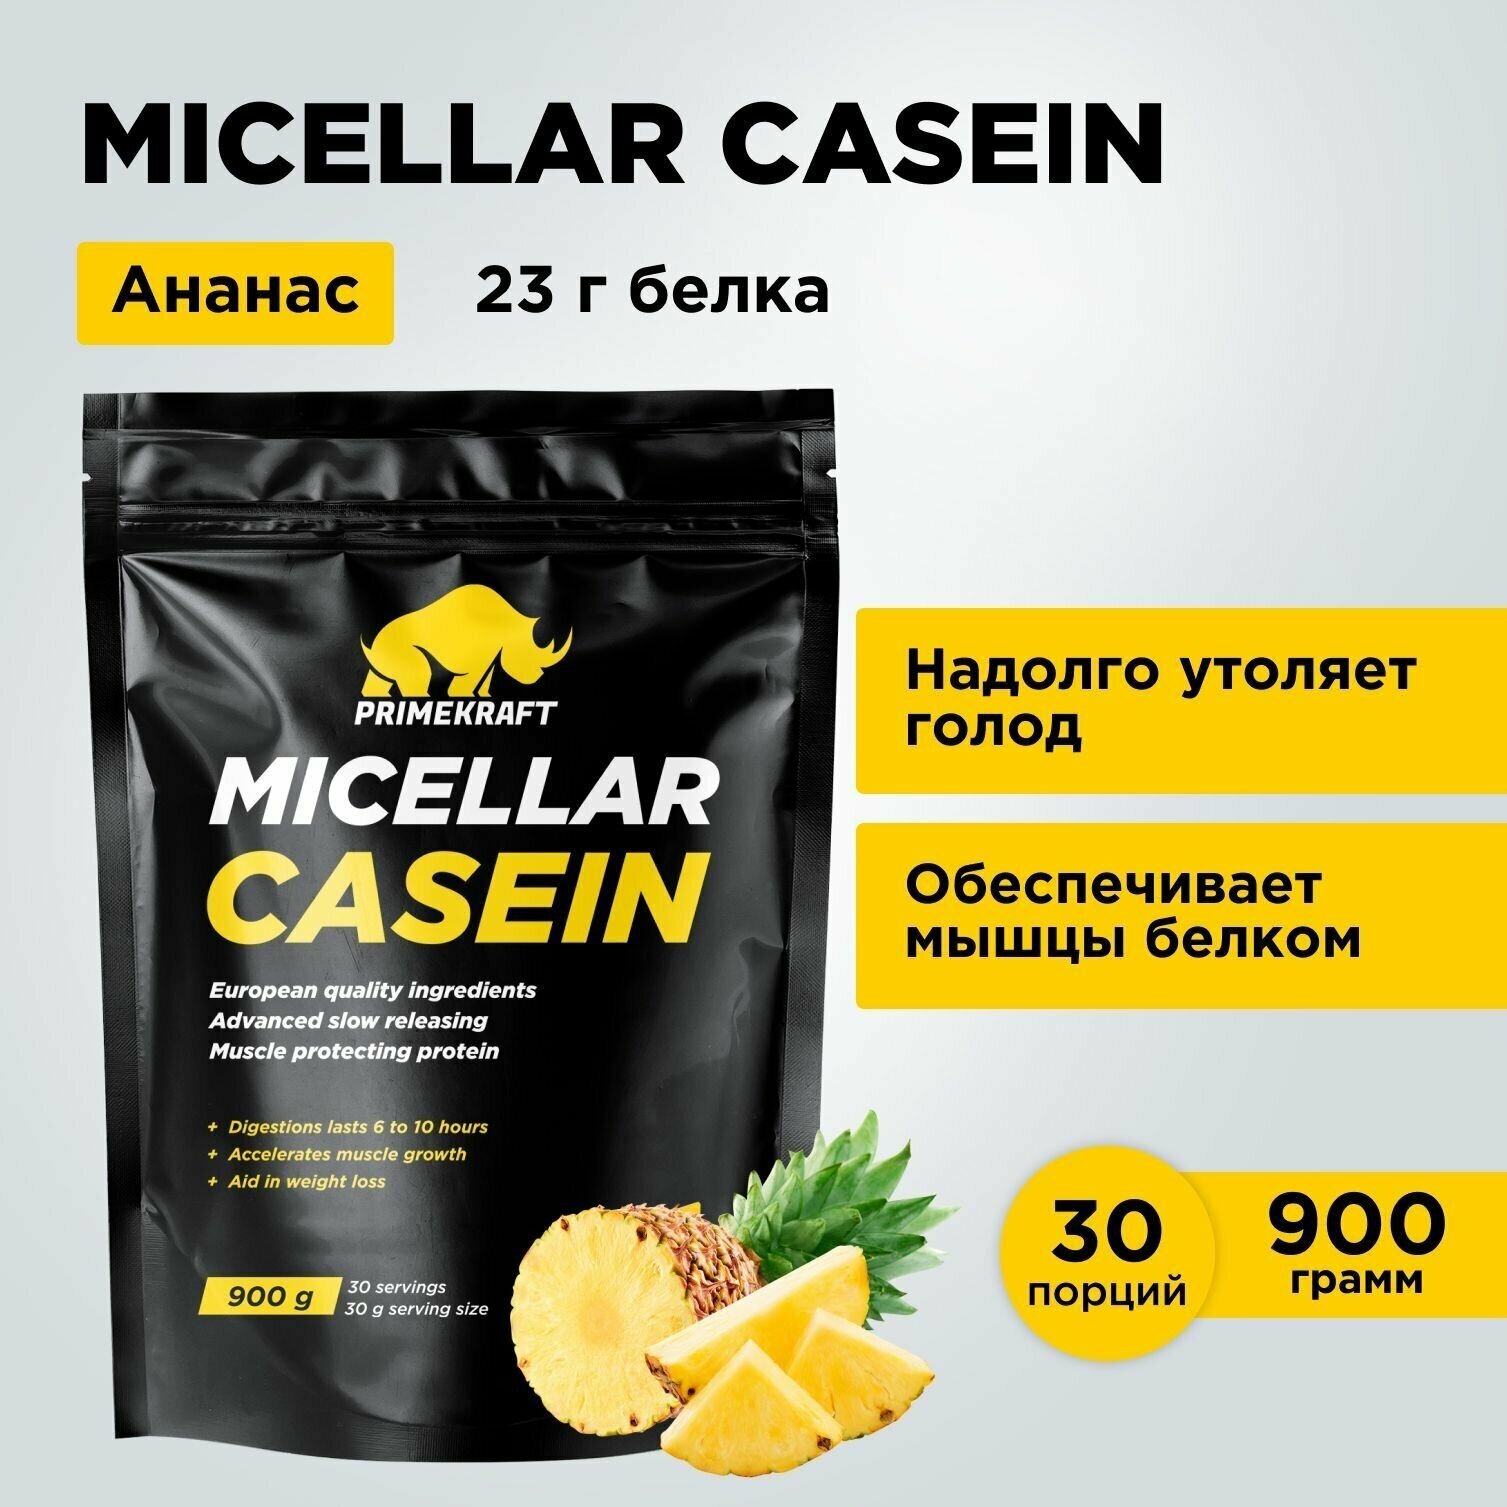 Мицеллярный казеин PRIMEKRAFT Micellar Casein Ананасовый йогурт, 900 гр